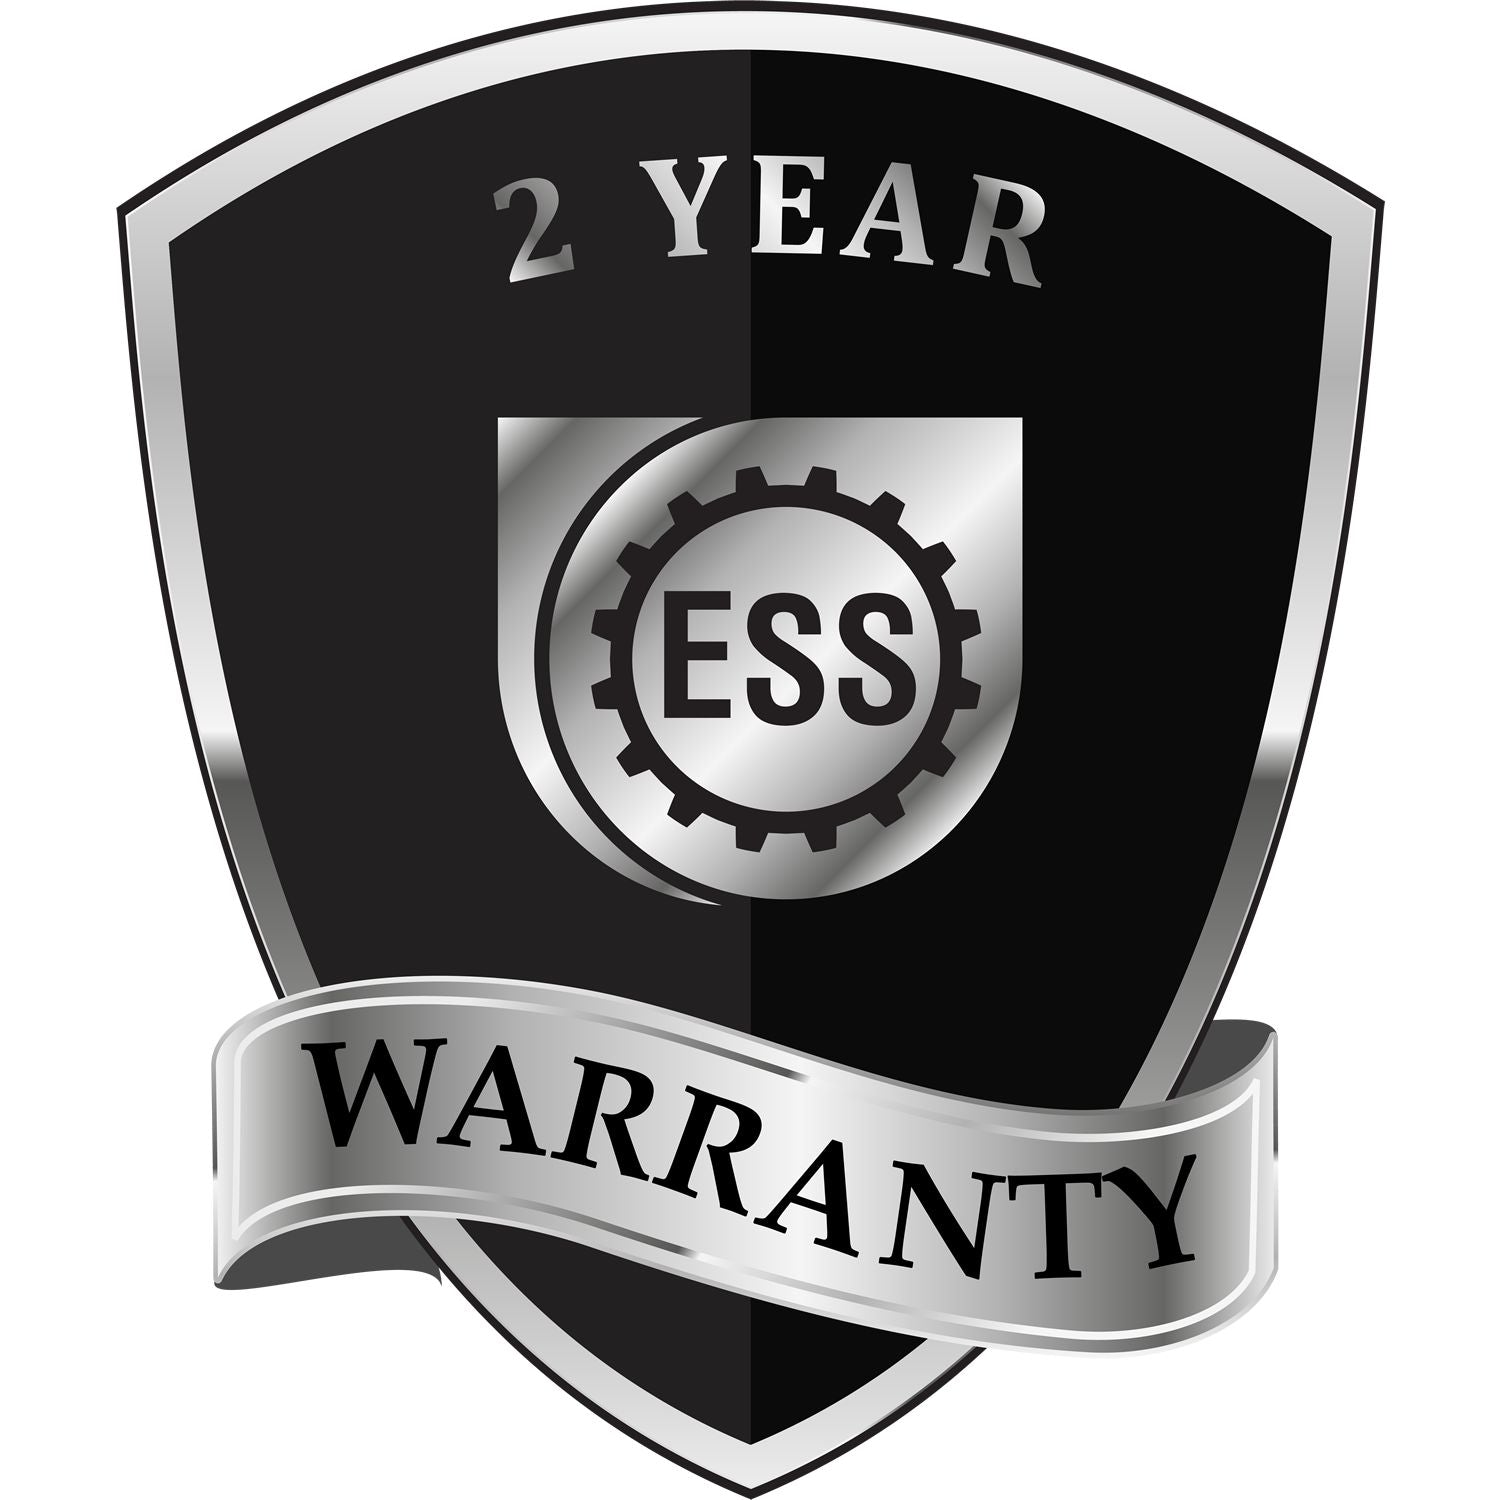 A badge or emblem showing a warranty icon for the New York Desk Surveyor Seal Embosser